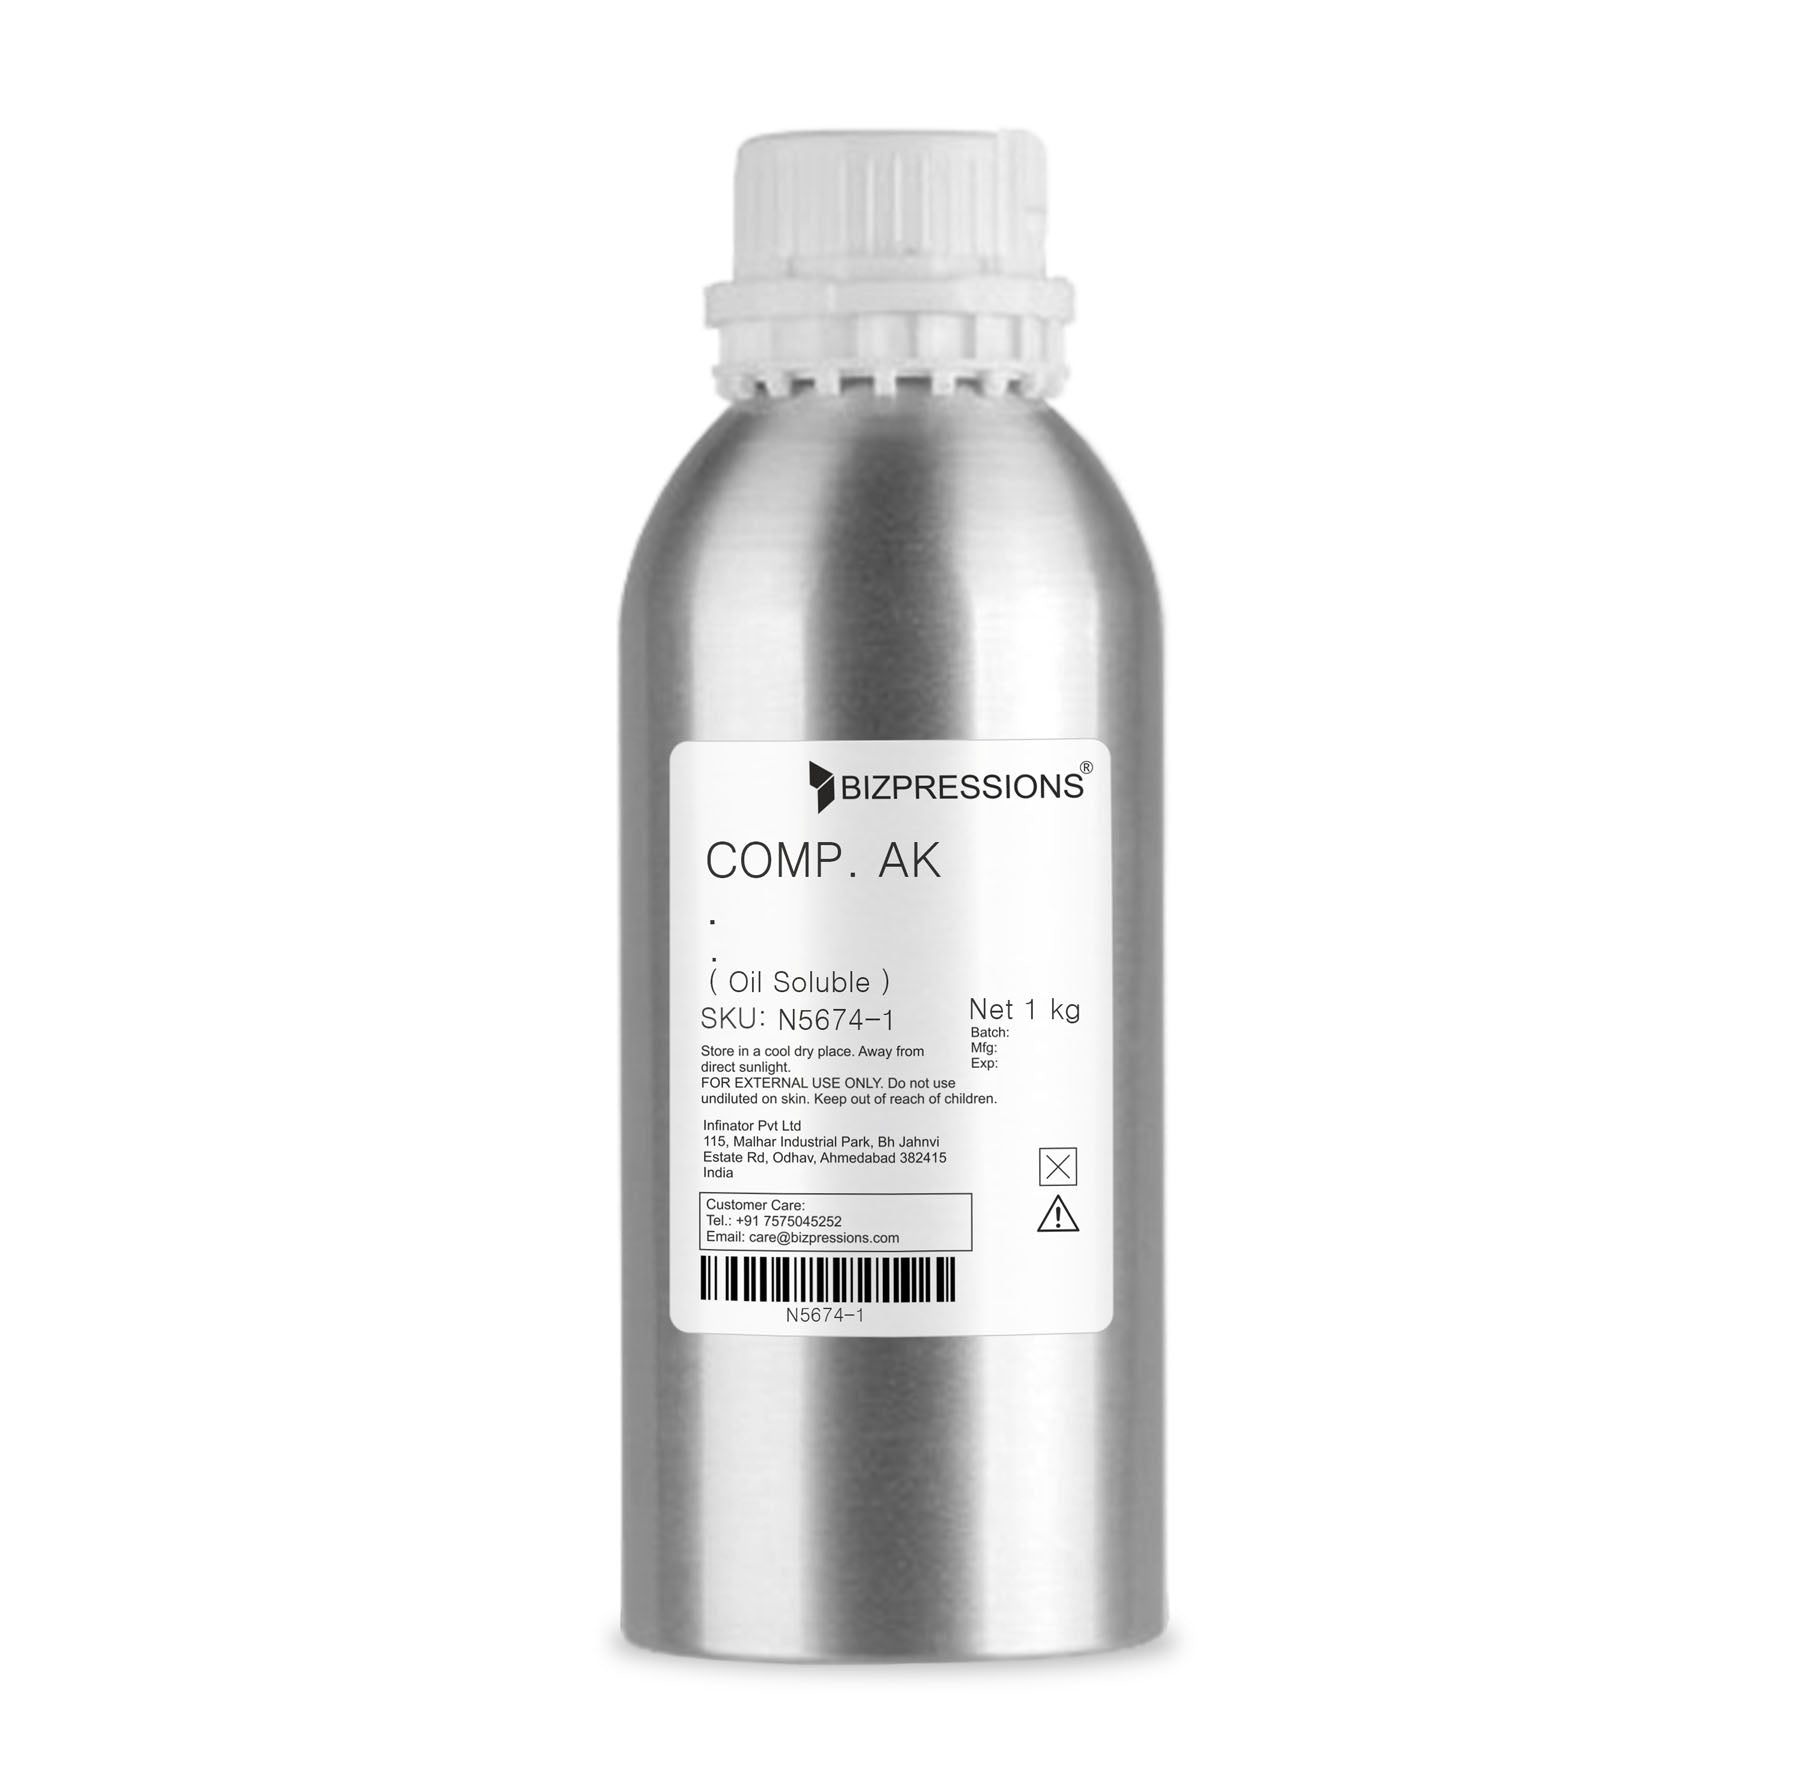 COMP. AK - Fragrance ( Oil Soluble ) - 1 kg